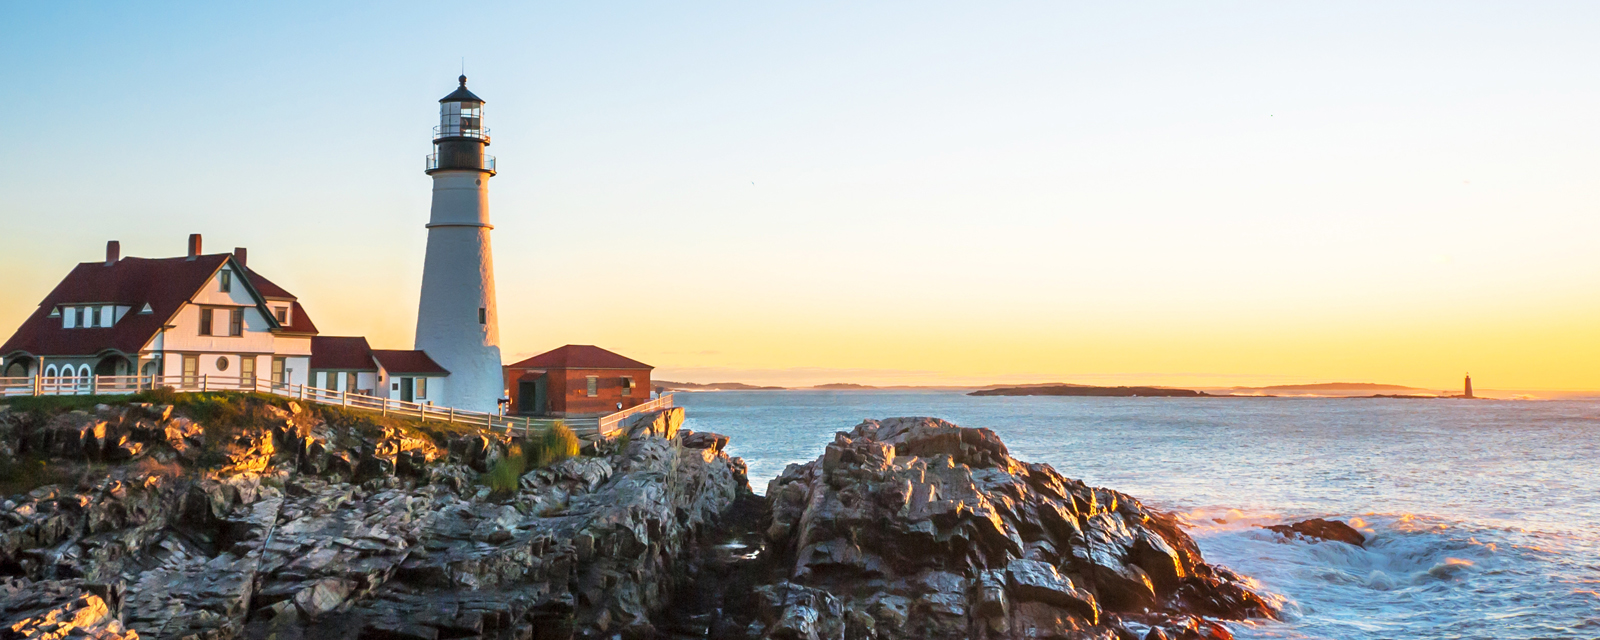 Lighthouse off coast of Maine